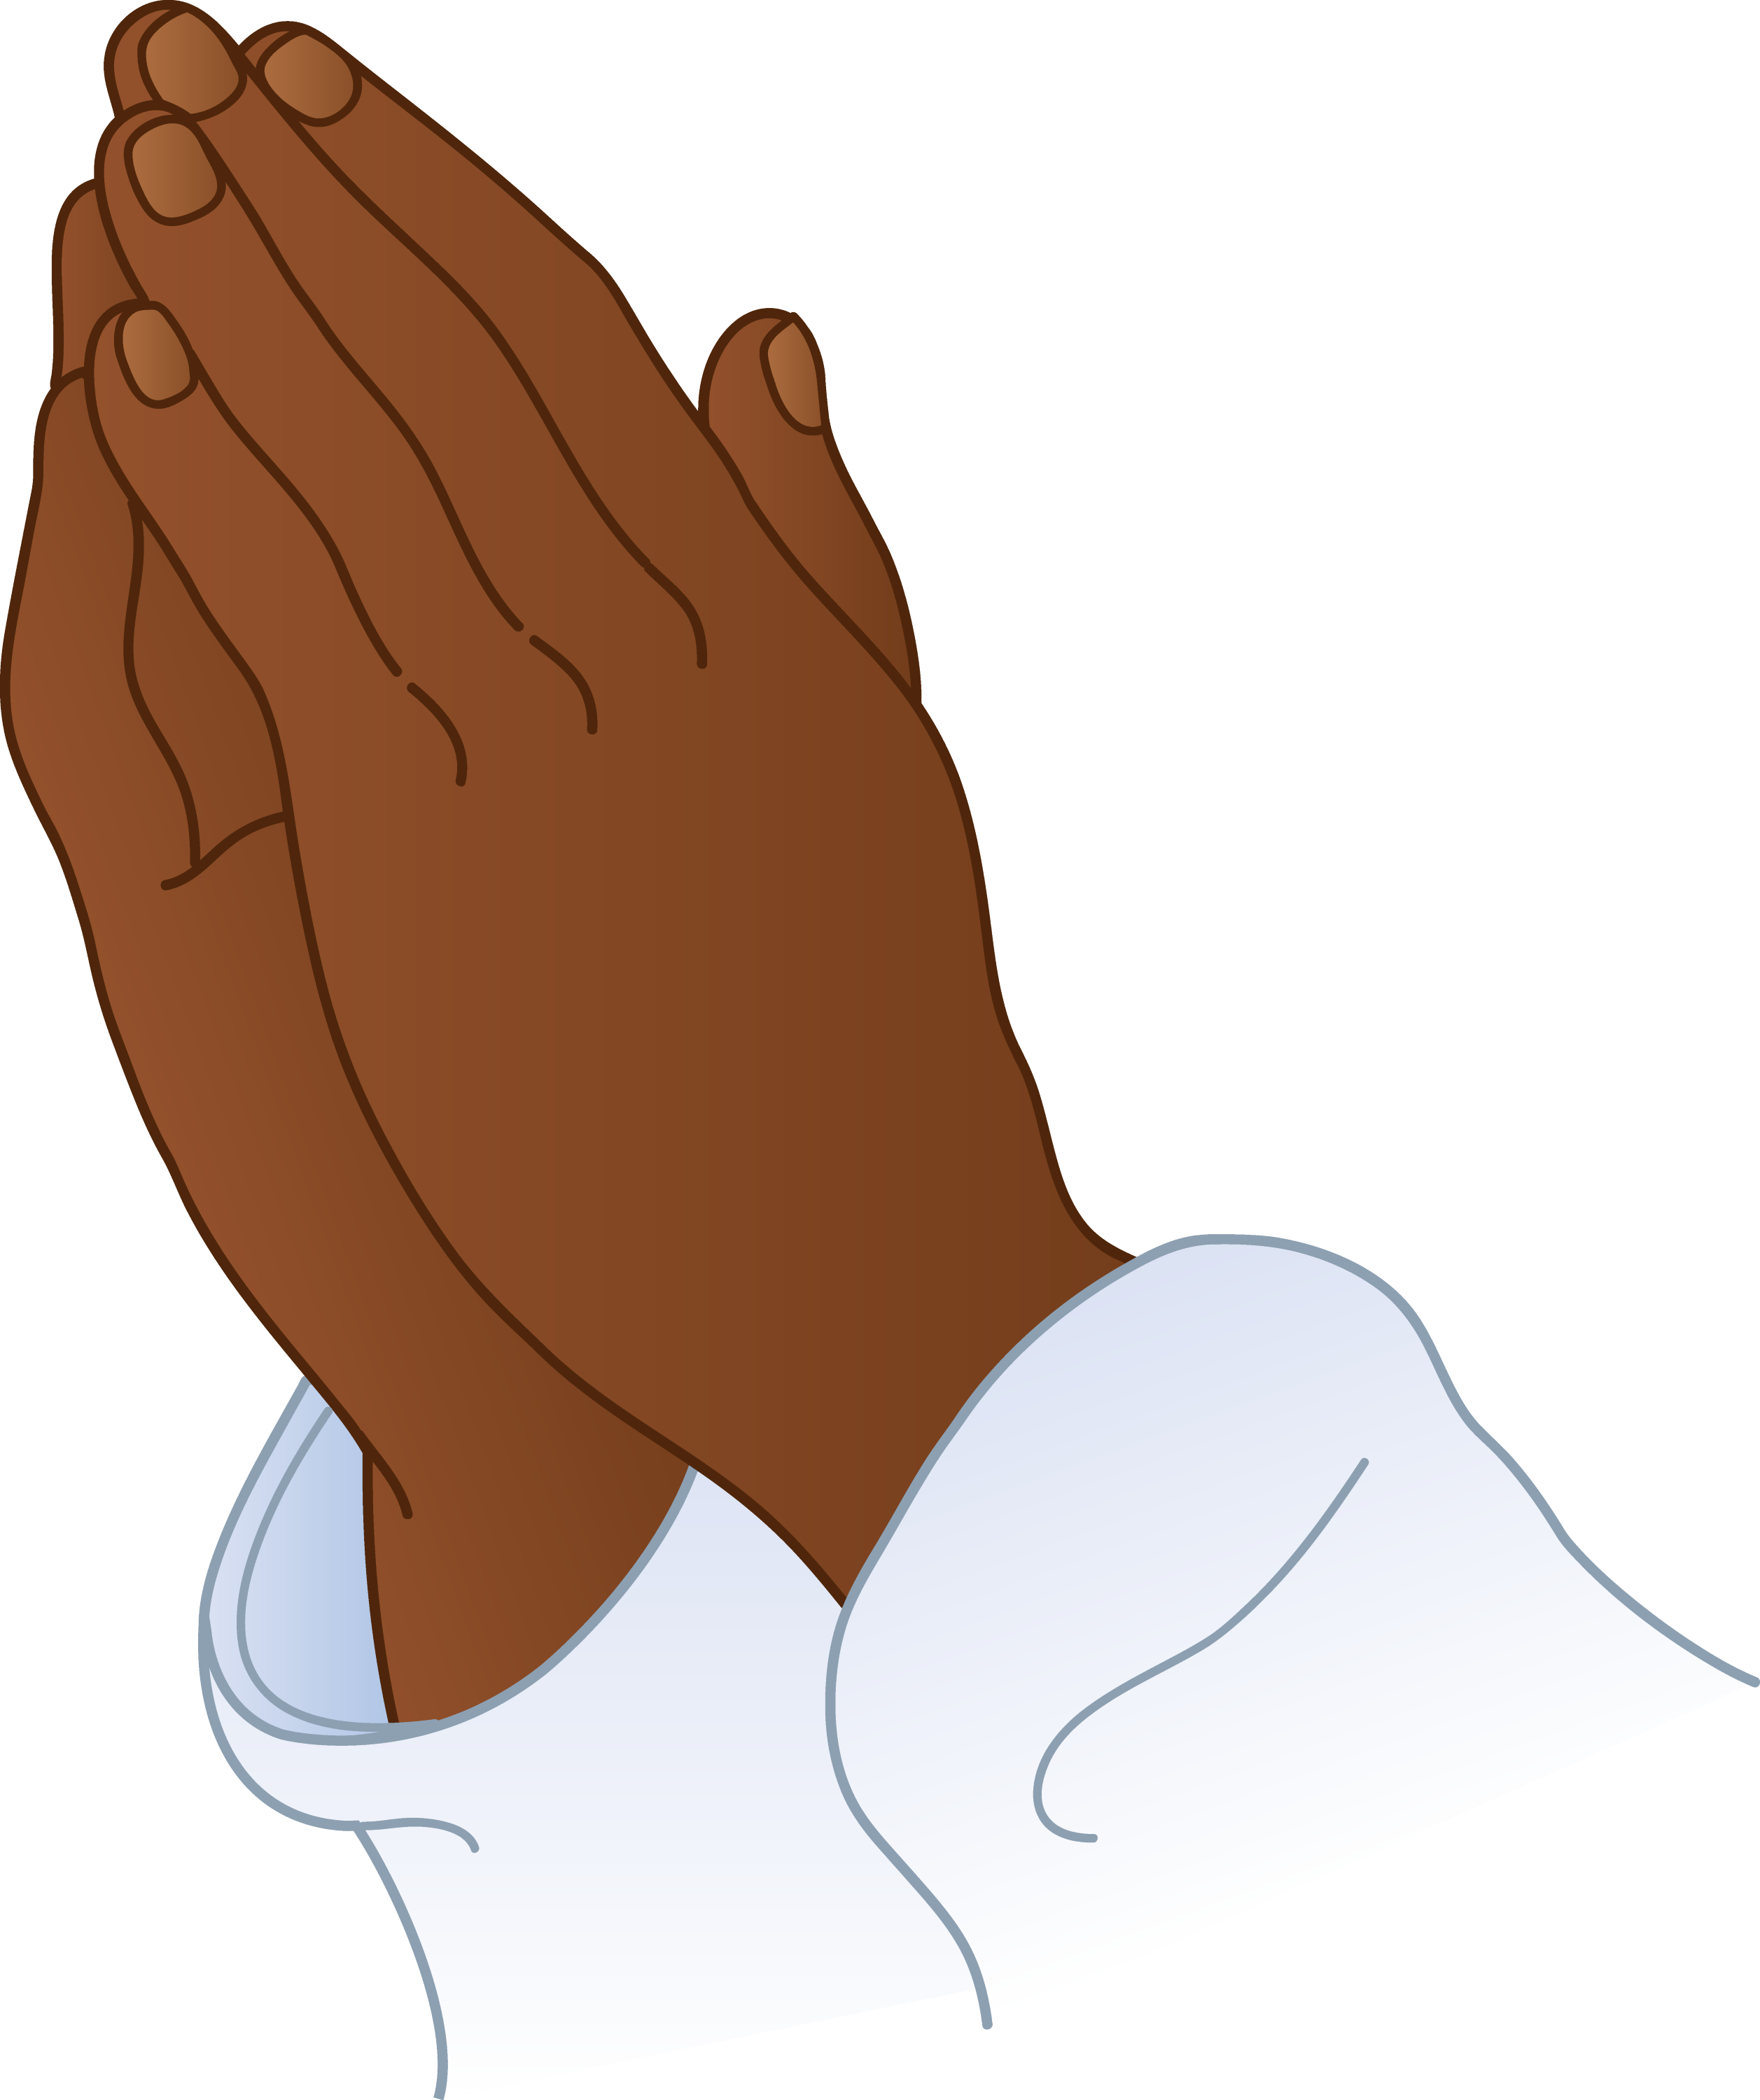 Praying Hands 2 - Free Clip Art